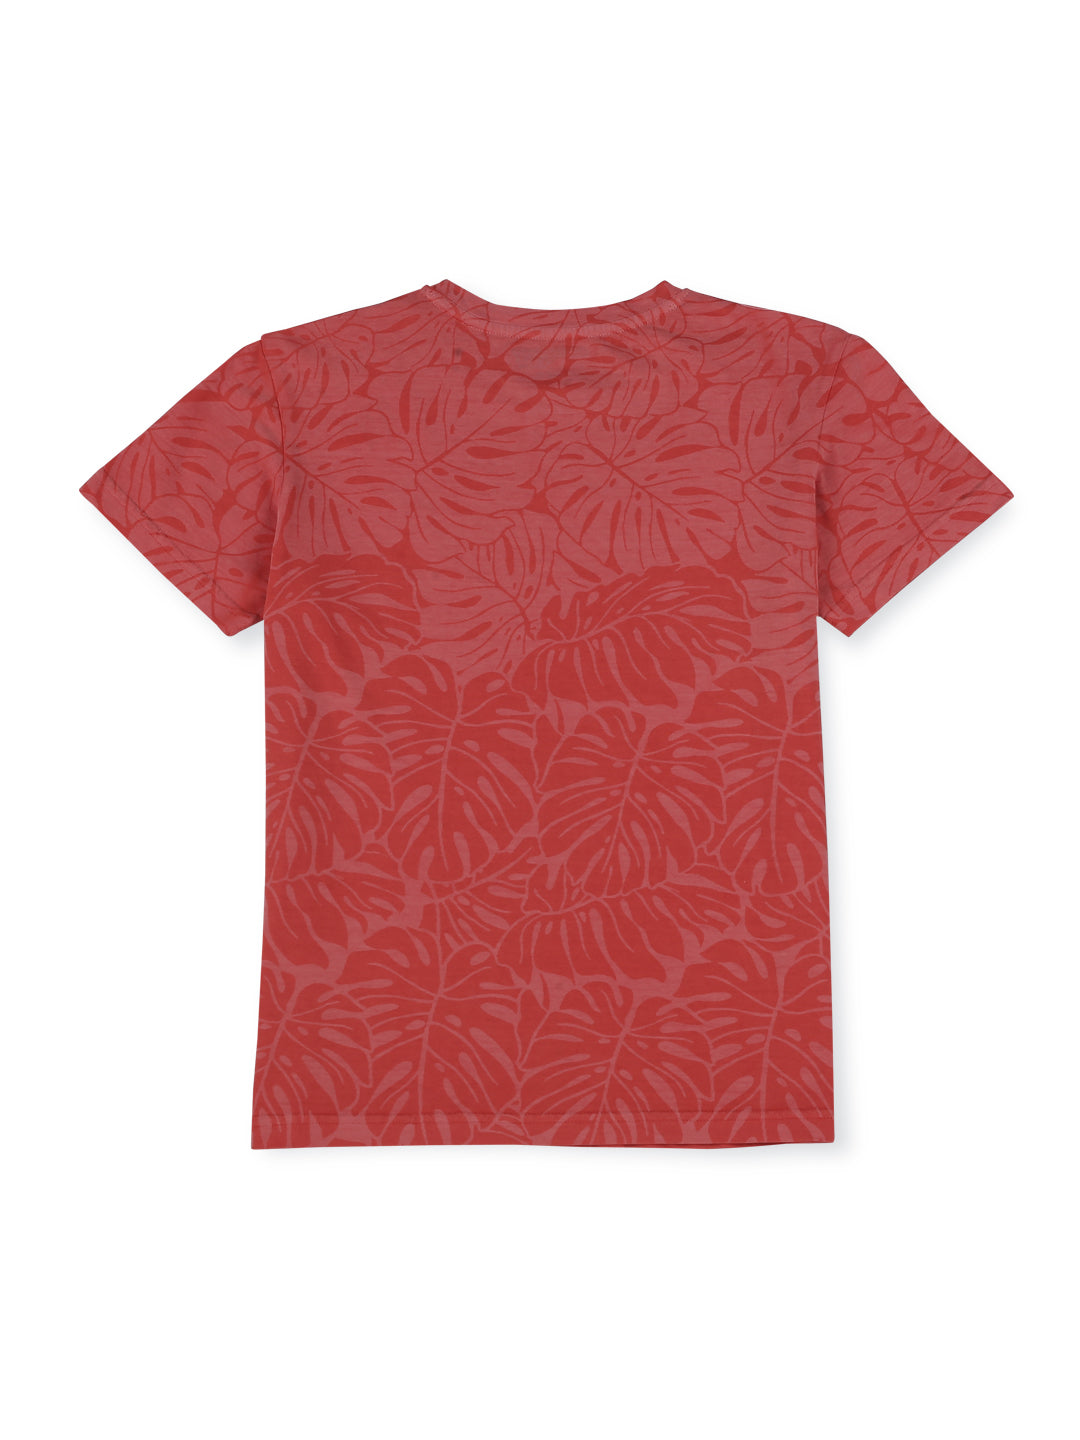 Boys Red Cotton Printed T-Shirt